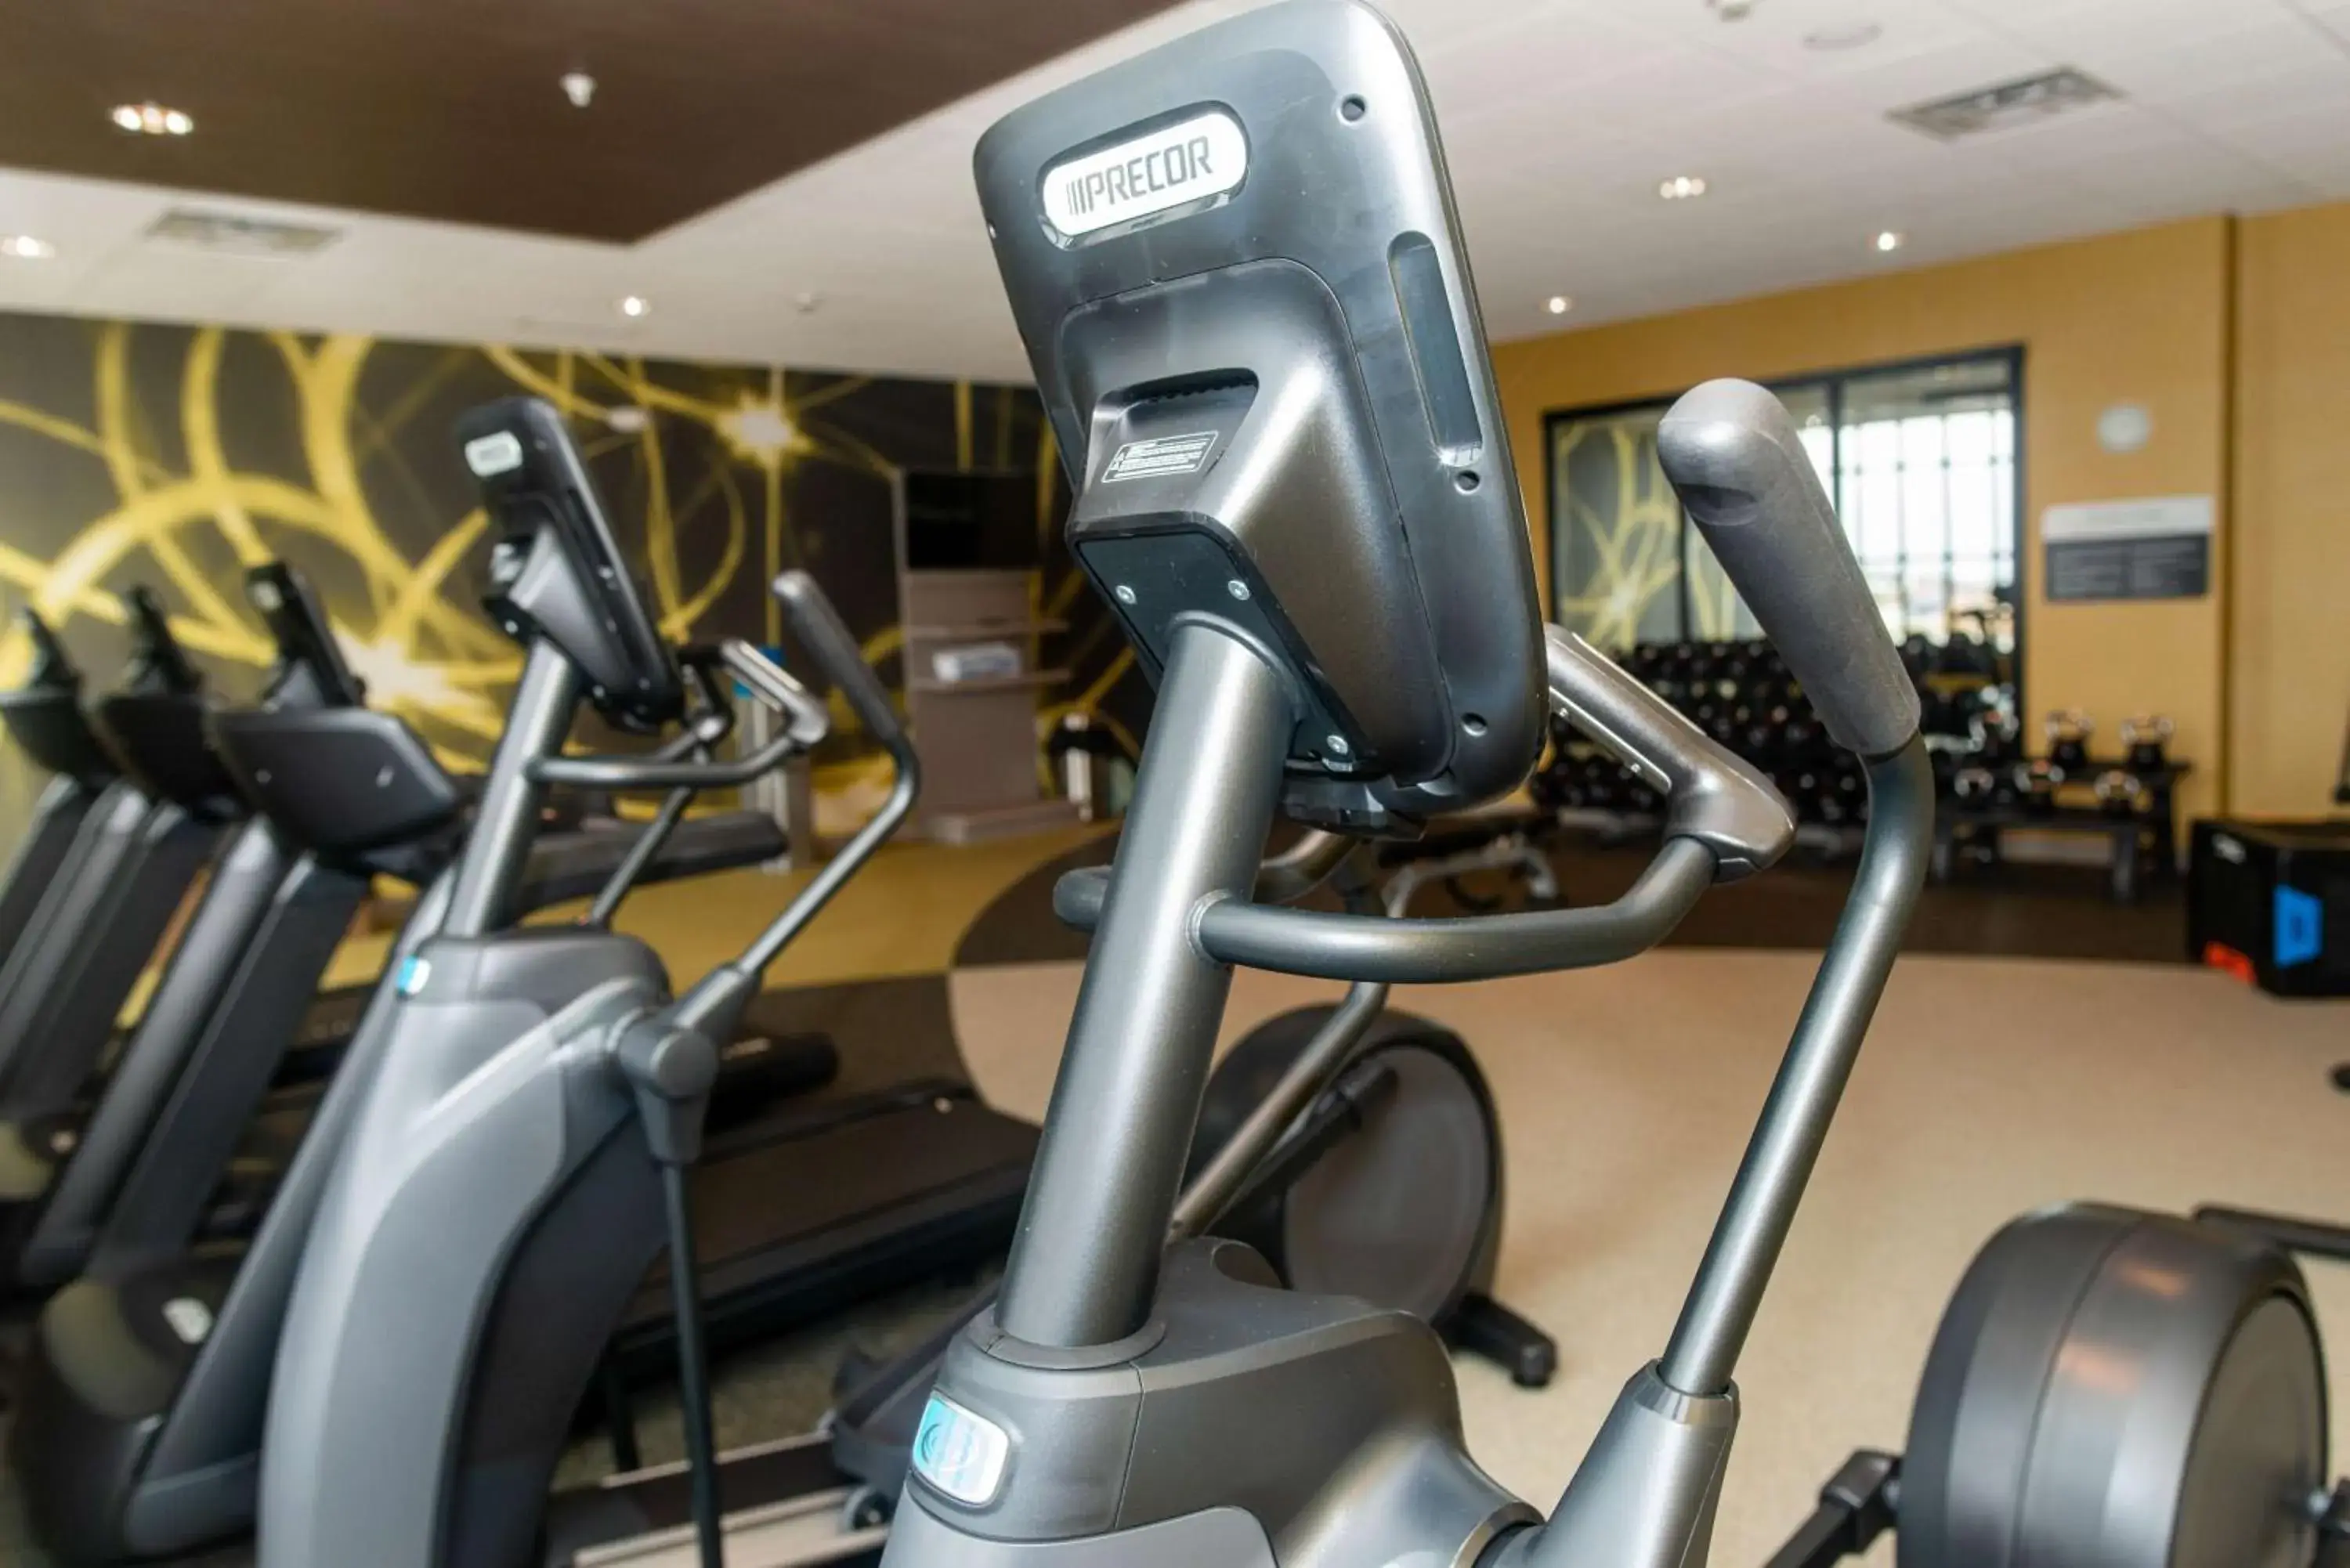 Fitness centre/facilities, Fitness Center/Facilities in Hilton Garden Inn Mattoon, IL